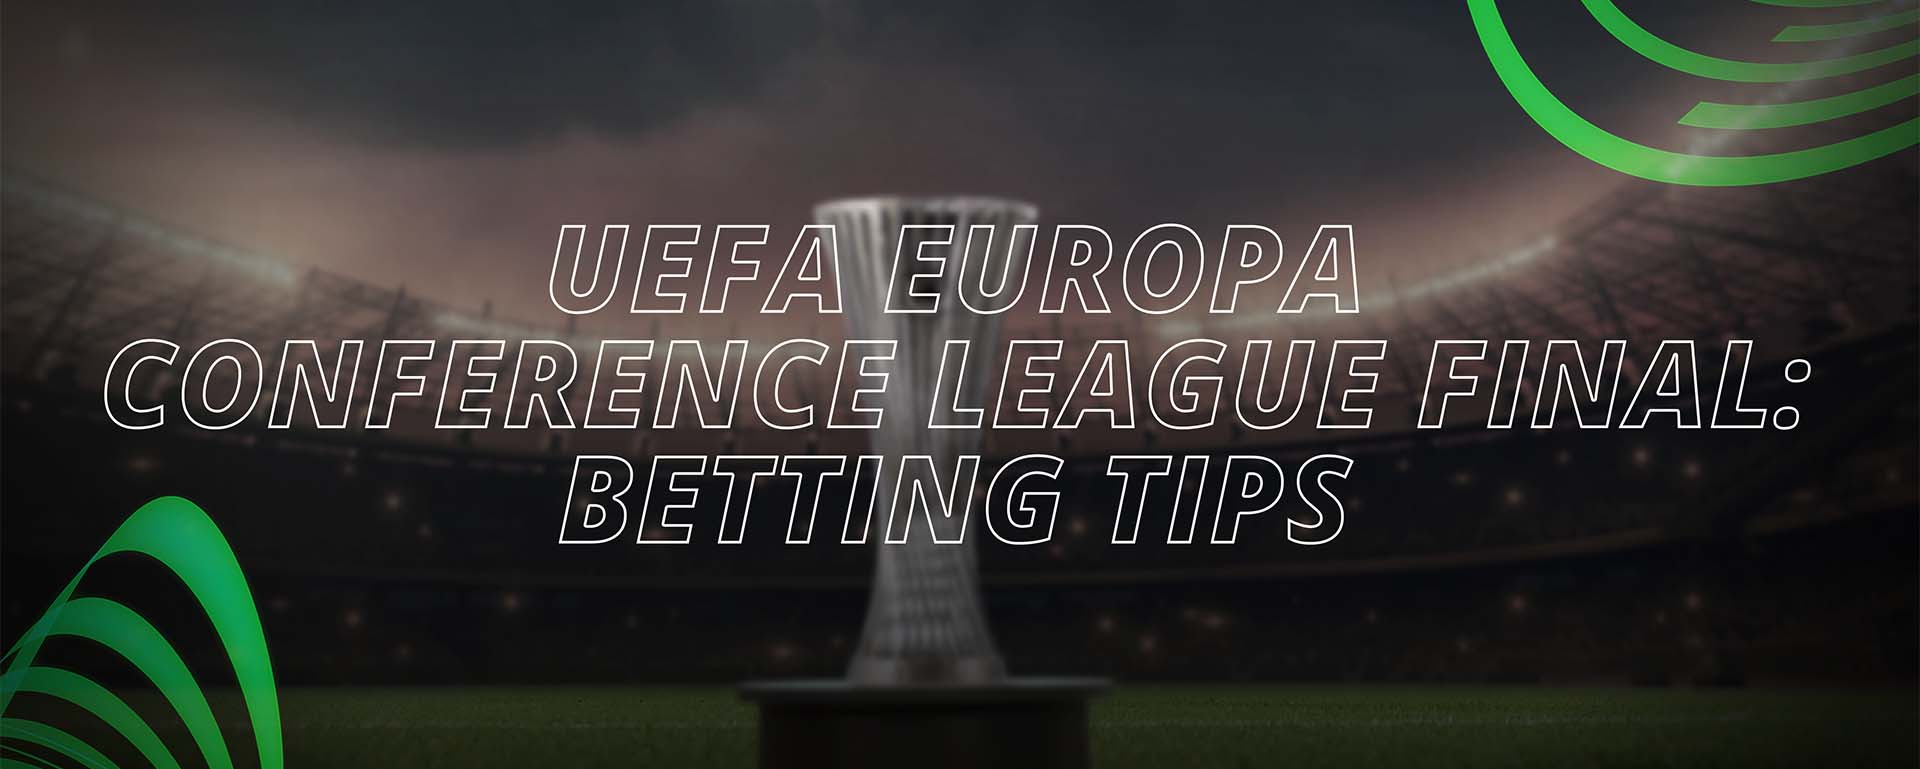 UEFA EUROPA CONFERENCE LEAGUE FINAL: BETTING TIPS